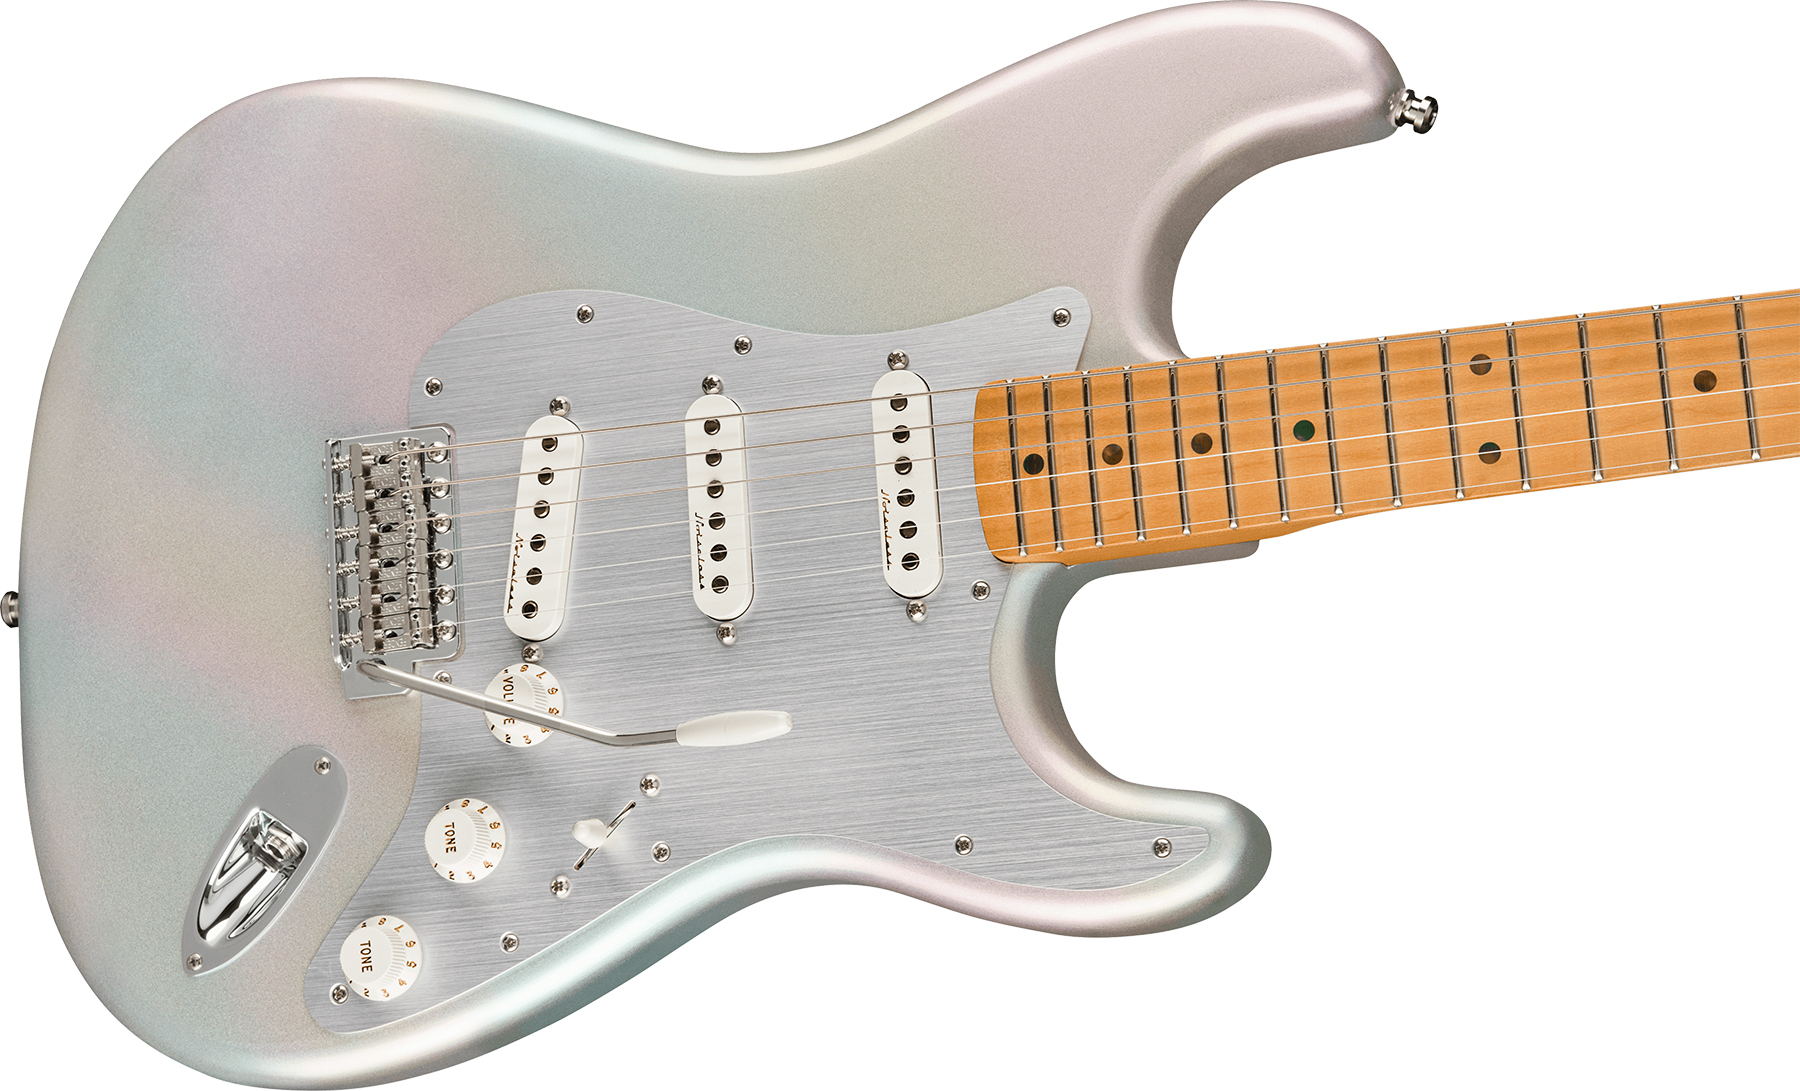 Fender H.e.r. Strat Signature Mex 3s Trem Mn - Chrome Glow - Str shape electric guitar - Variation 2